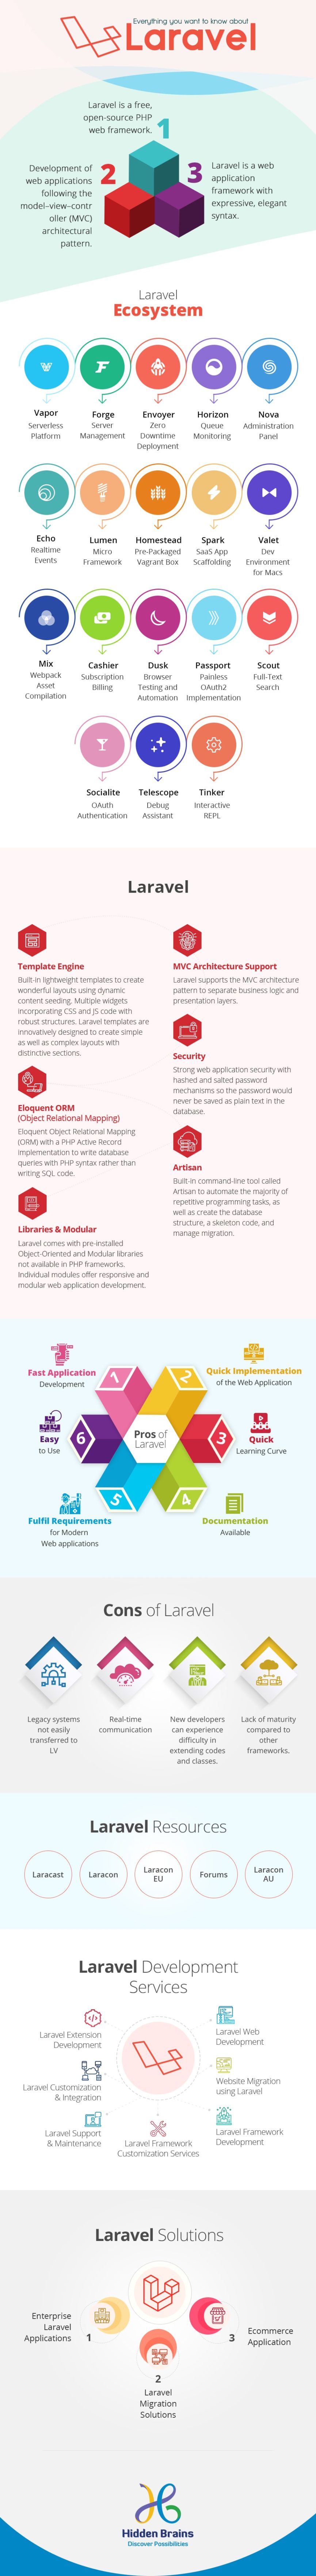 Infographics Explain Features and Advantages of Laravel